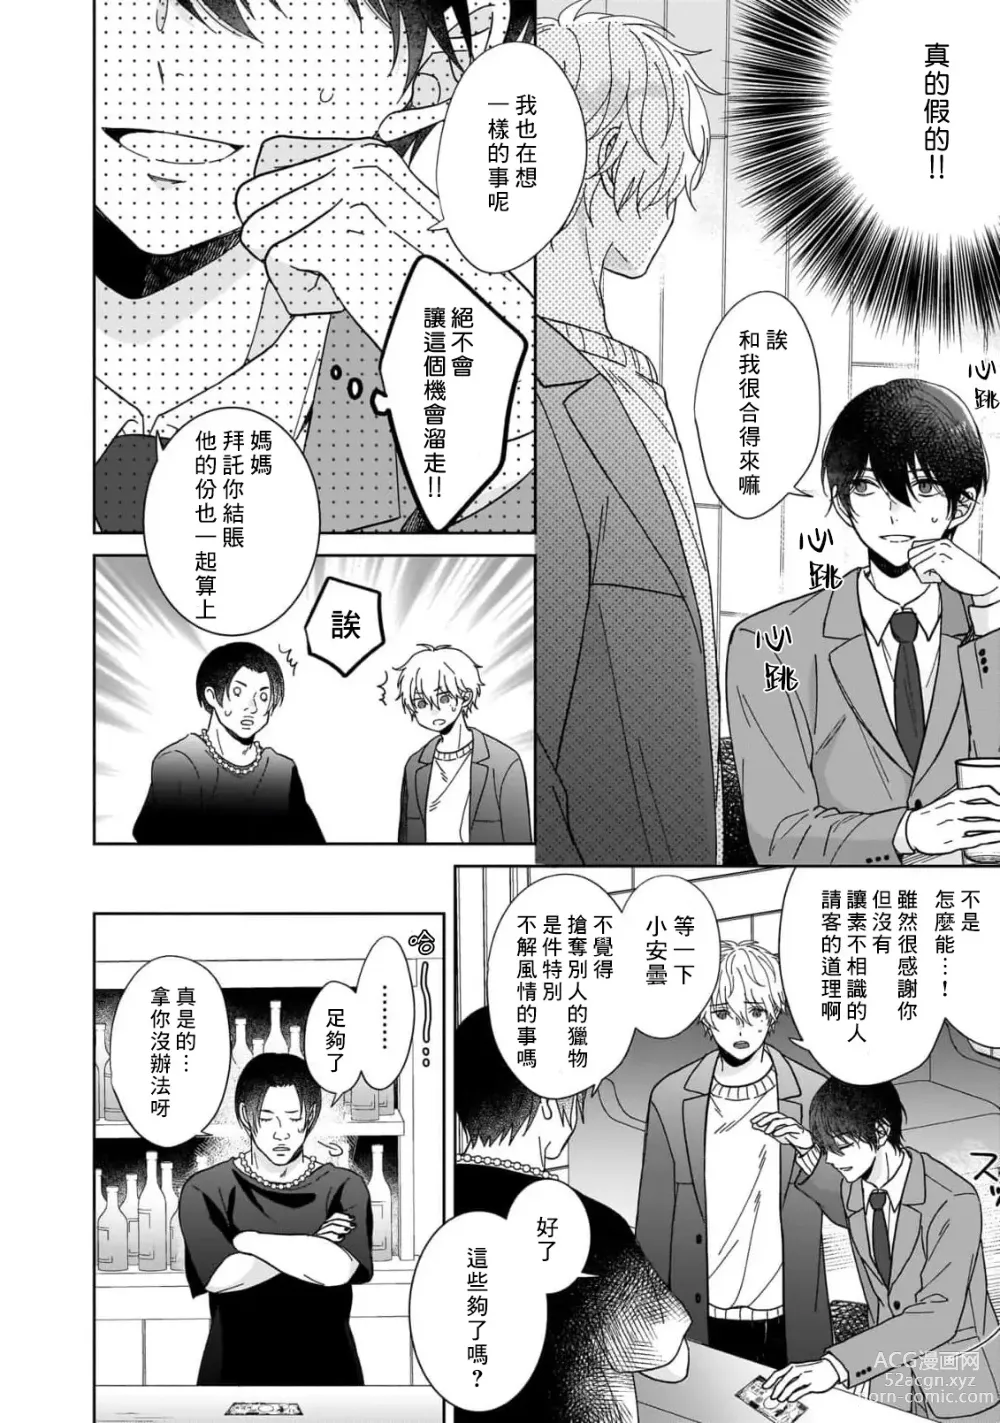 Page 10 of manga 下雨天有些许忧郁 1